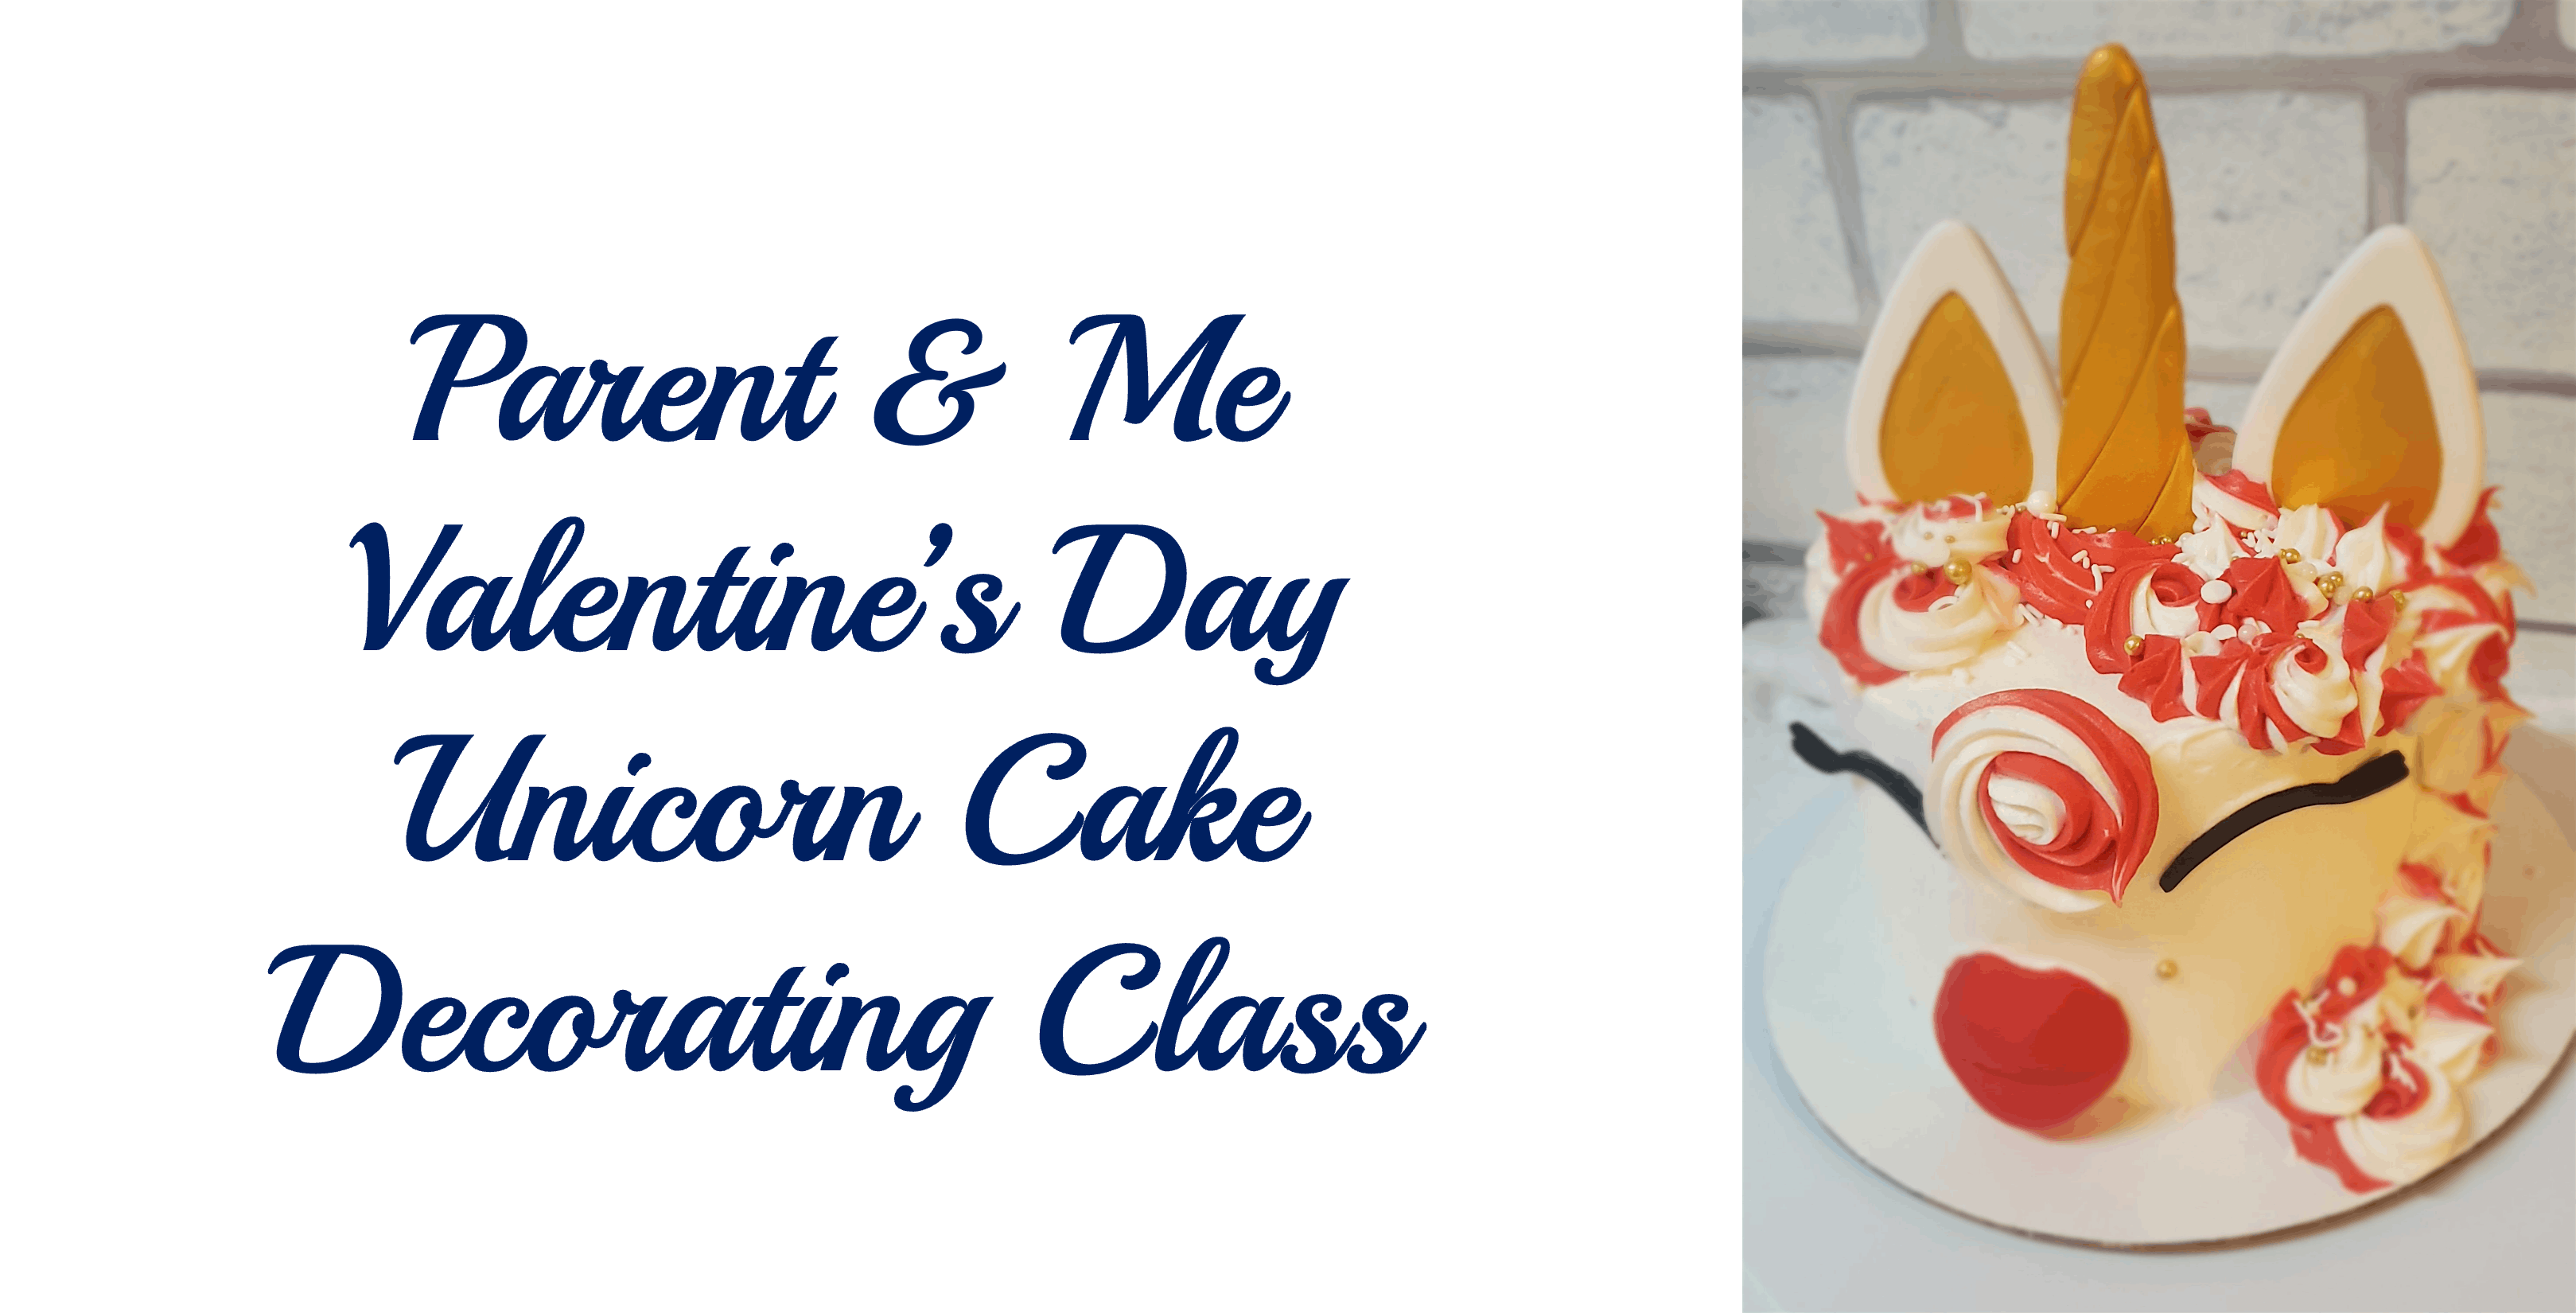 Parent & Me Valentines Day Unicorn Cake Decorating Class